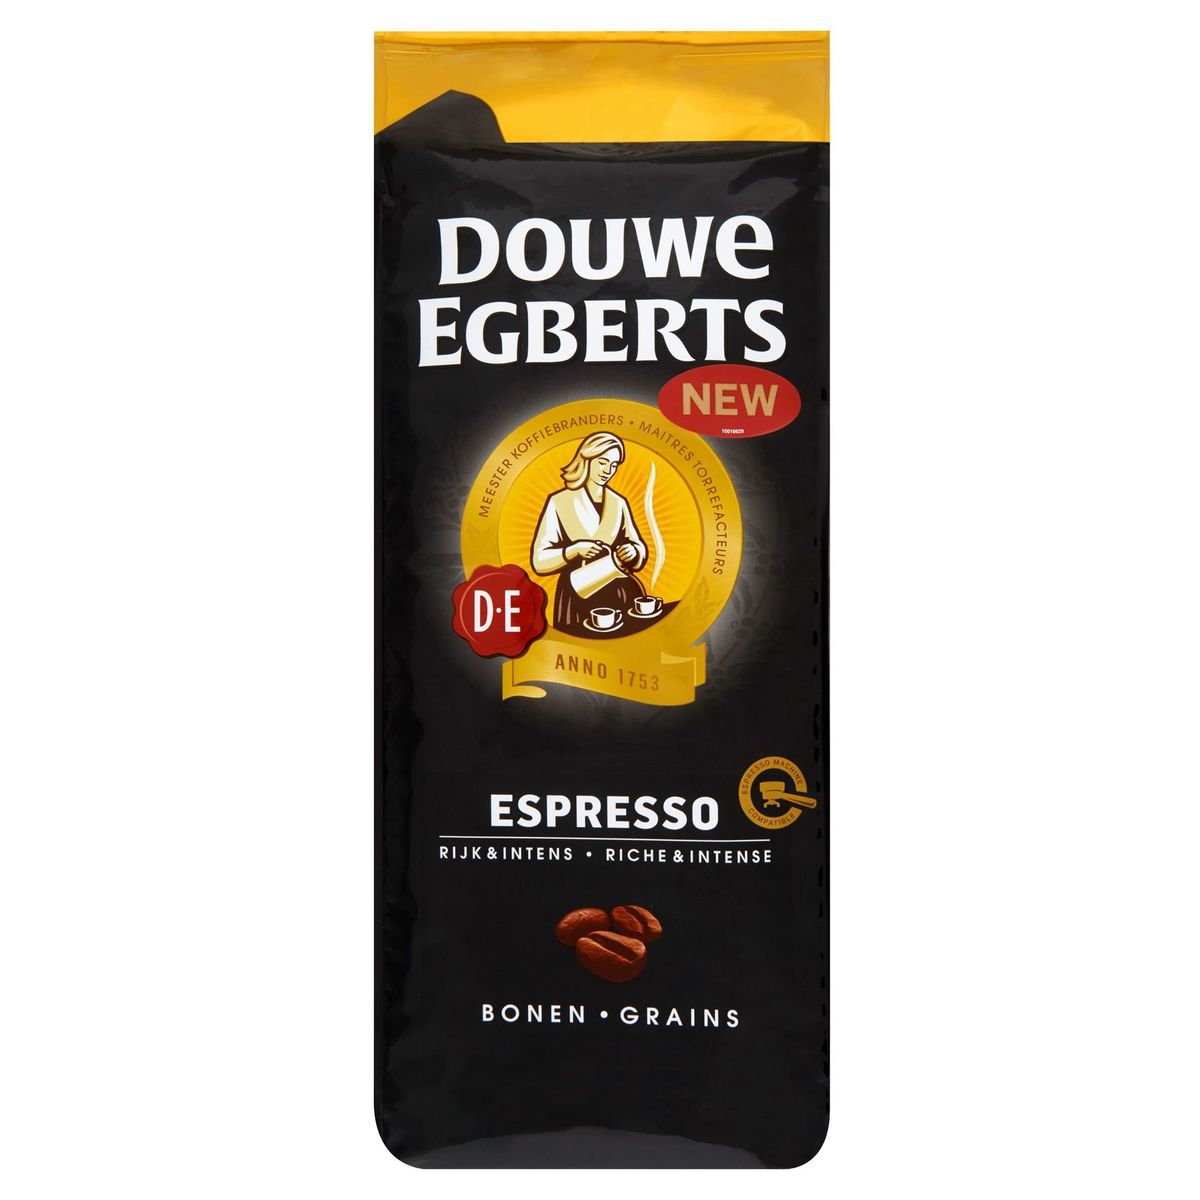 DOUWE EGBERTS Koffie Bonen Espresso 1kg